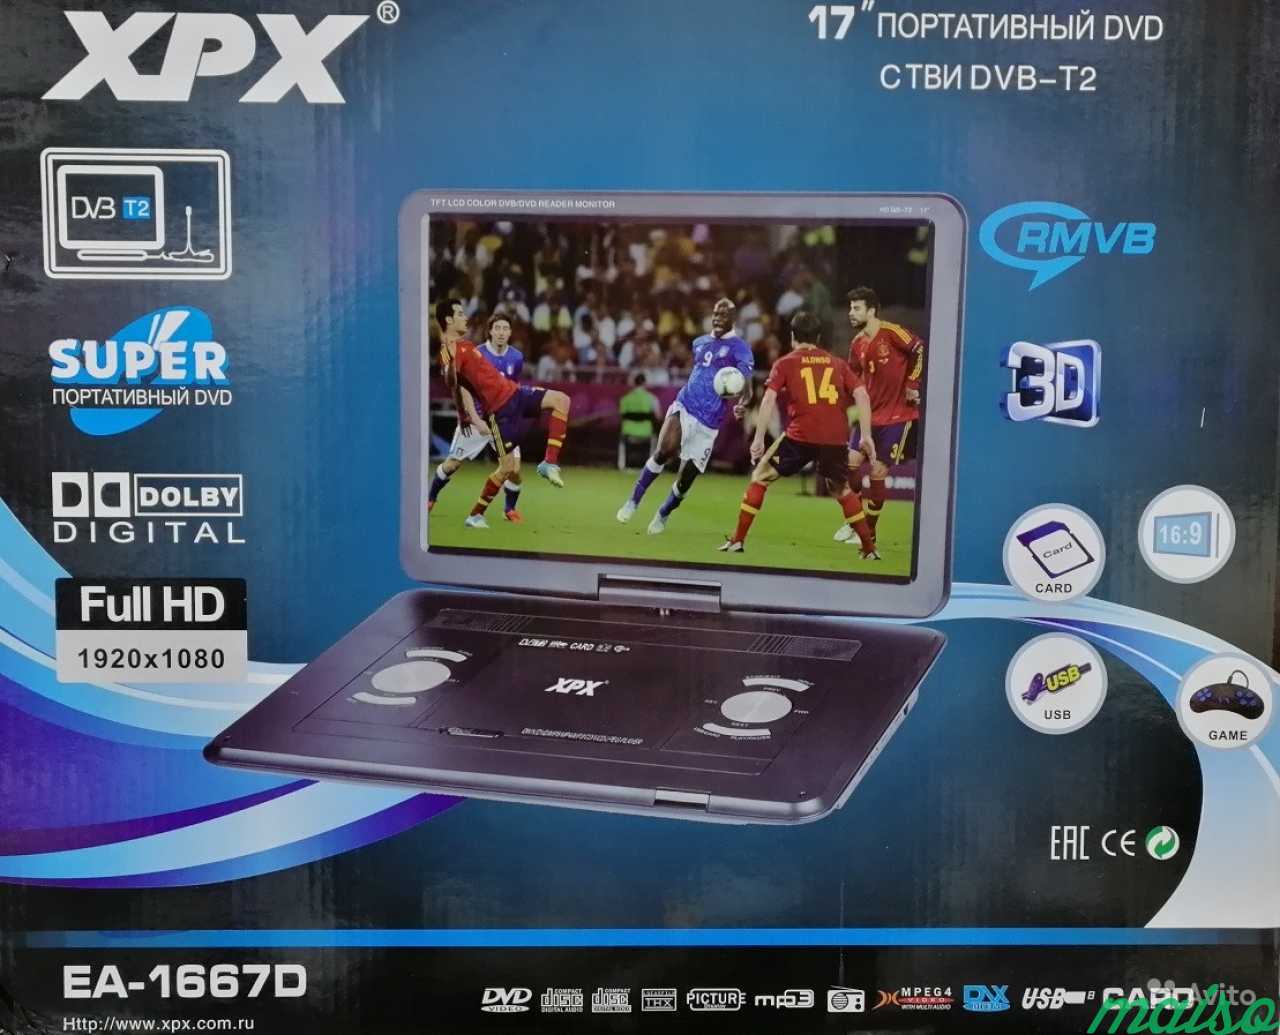 DVD-плеер с телевизором XPX EA-1667D 17 DVB T2 в Санкт-Петербурге. Фото 1